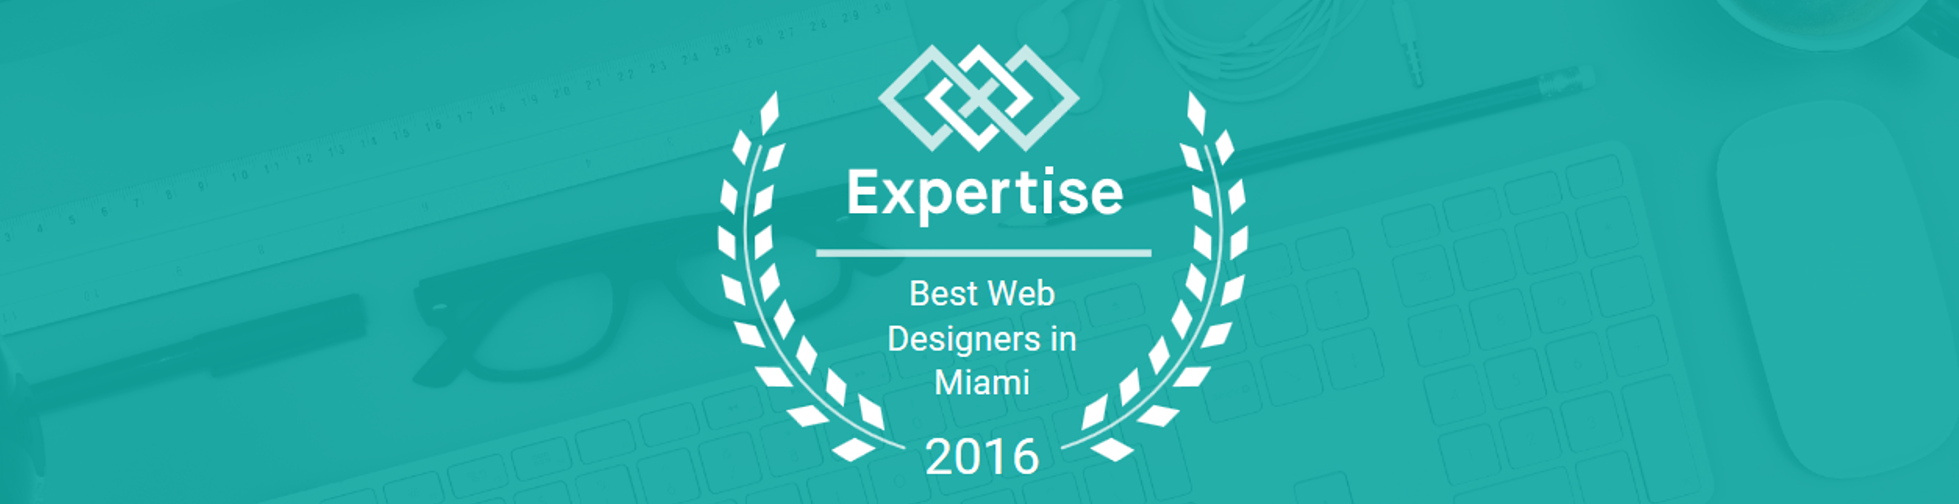 Expertise best web designers in Miami 2016